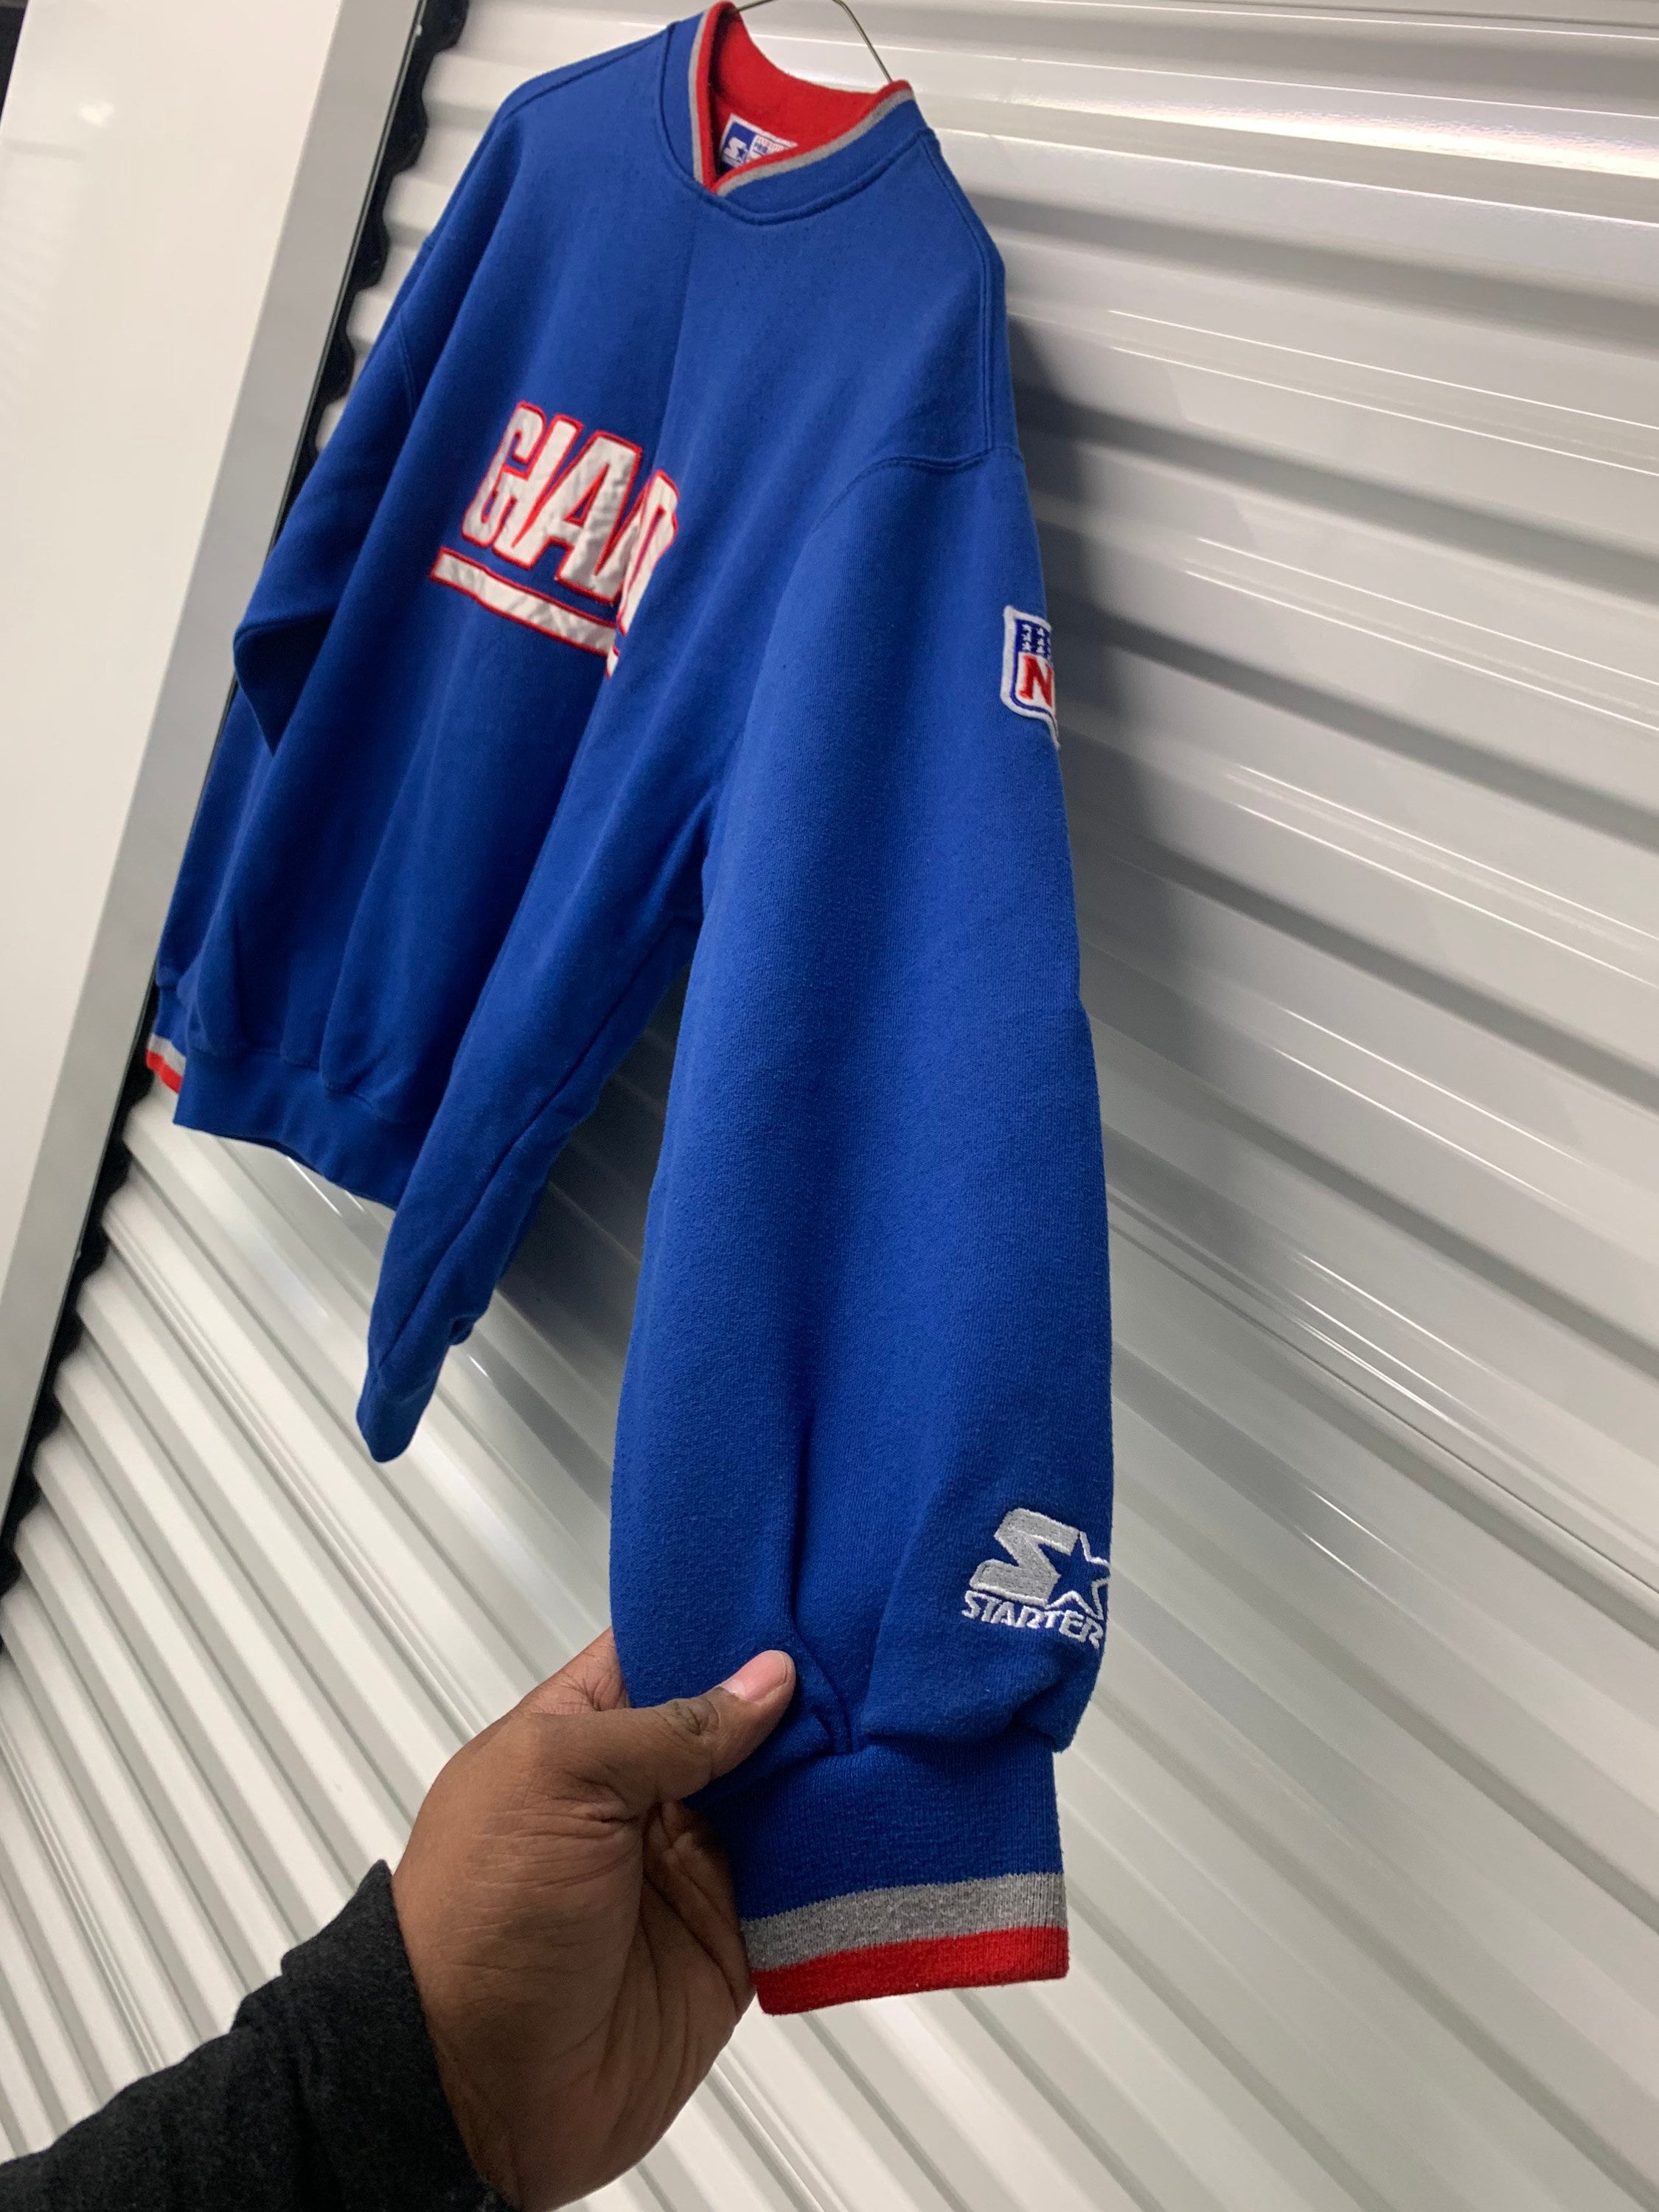 Vintage 90s New York Giants Starter Sweatshirt Size Mens 